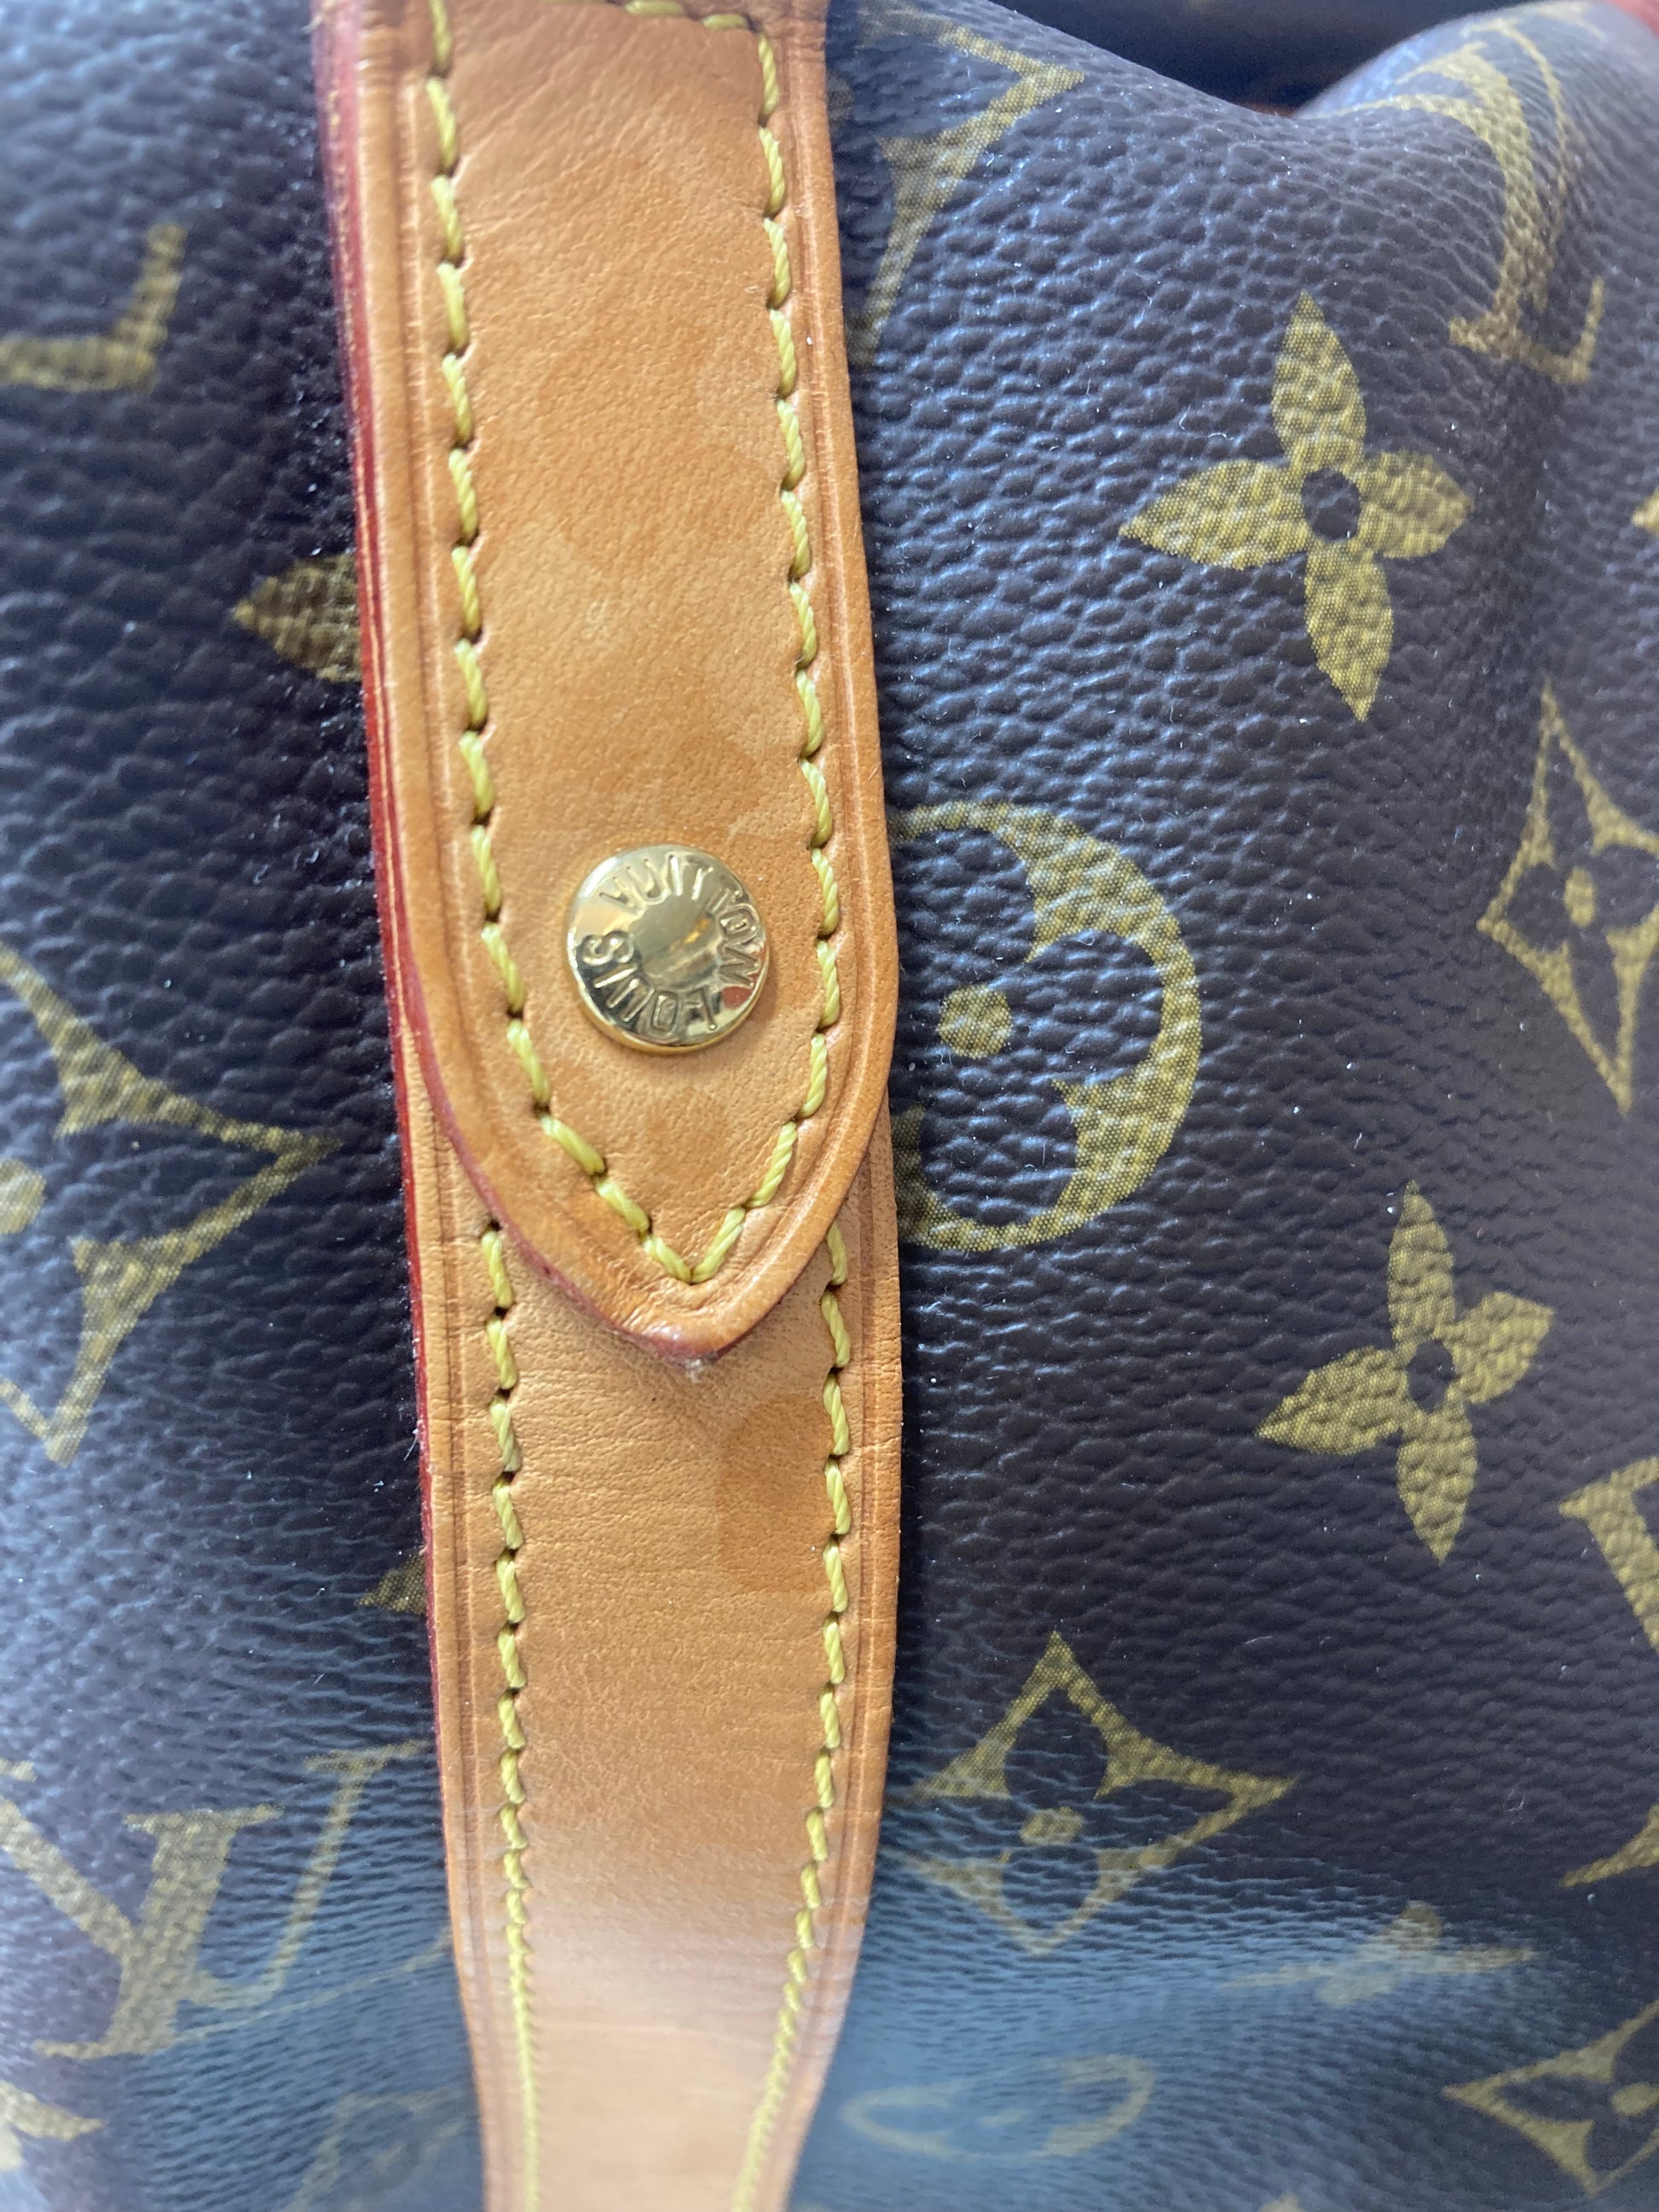 Stresa leather handbag Louis Vuitton Brown in Leather - 22826893